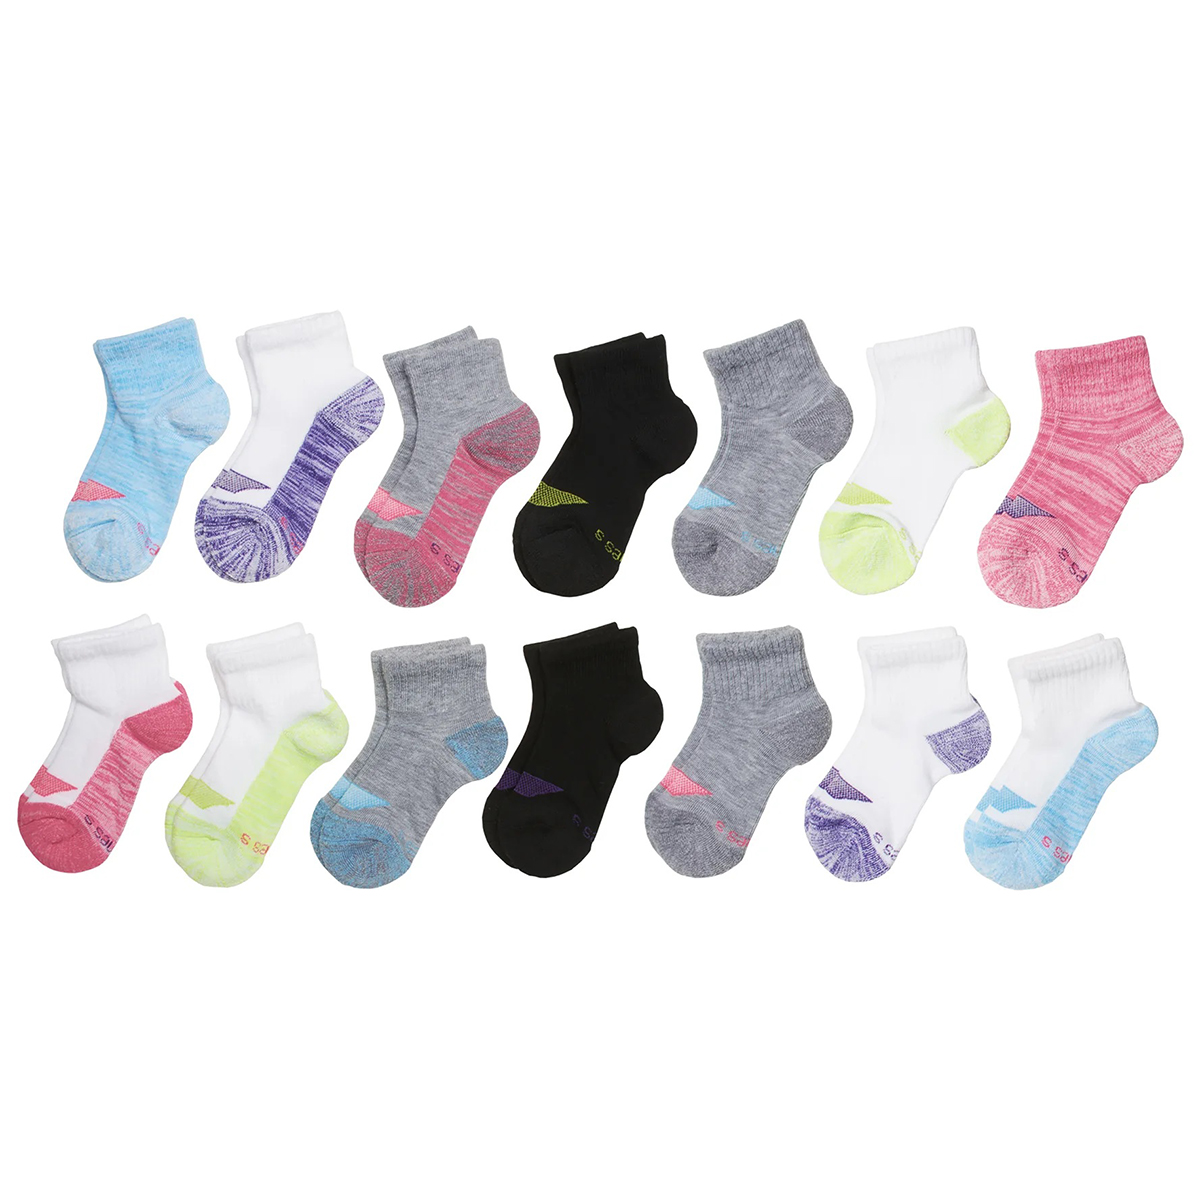 Hanes Girls' Ultimate Cool Comfort Ankle Socks, 14 Pack, VARIOUS PATTERNS